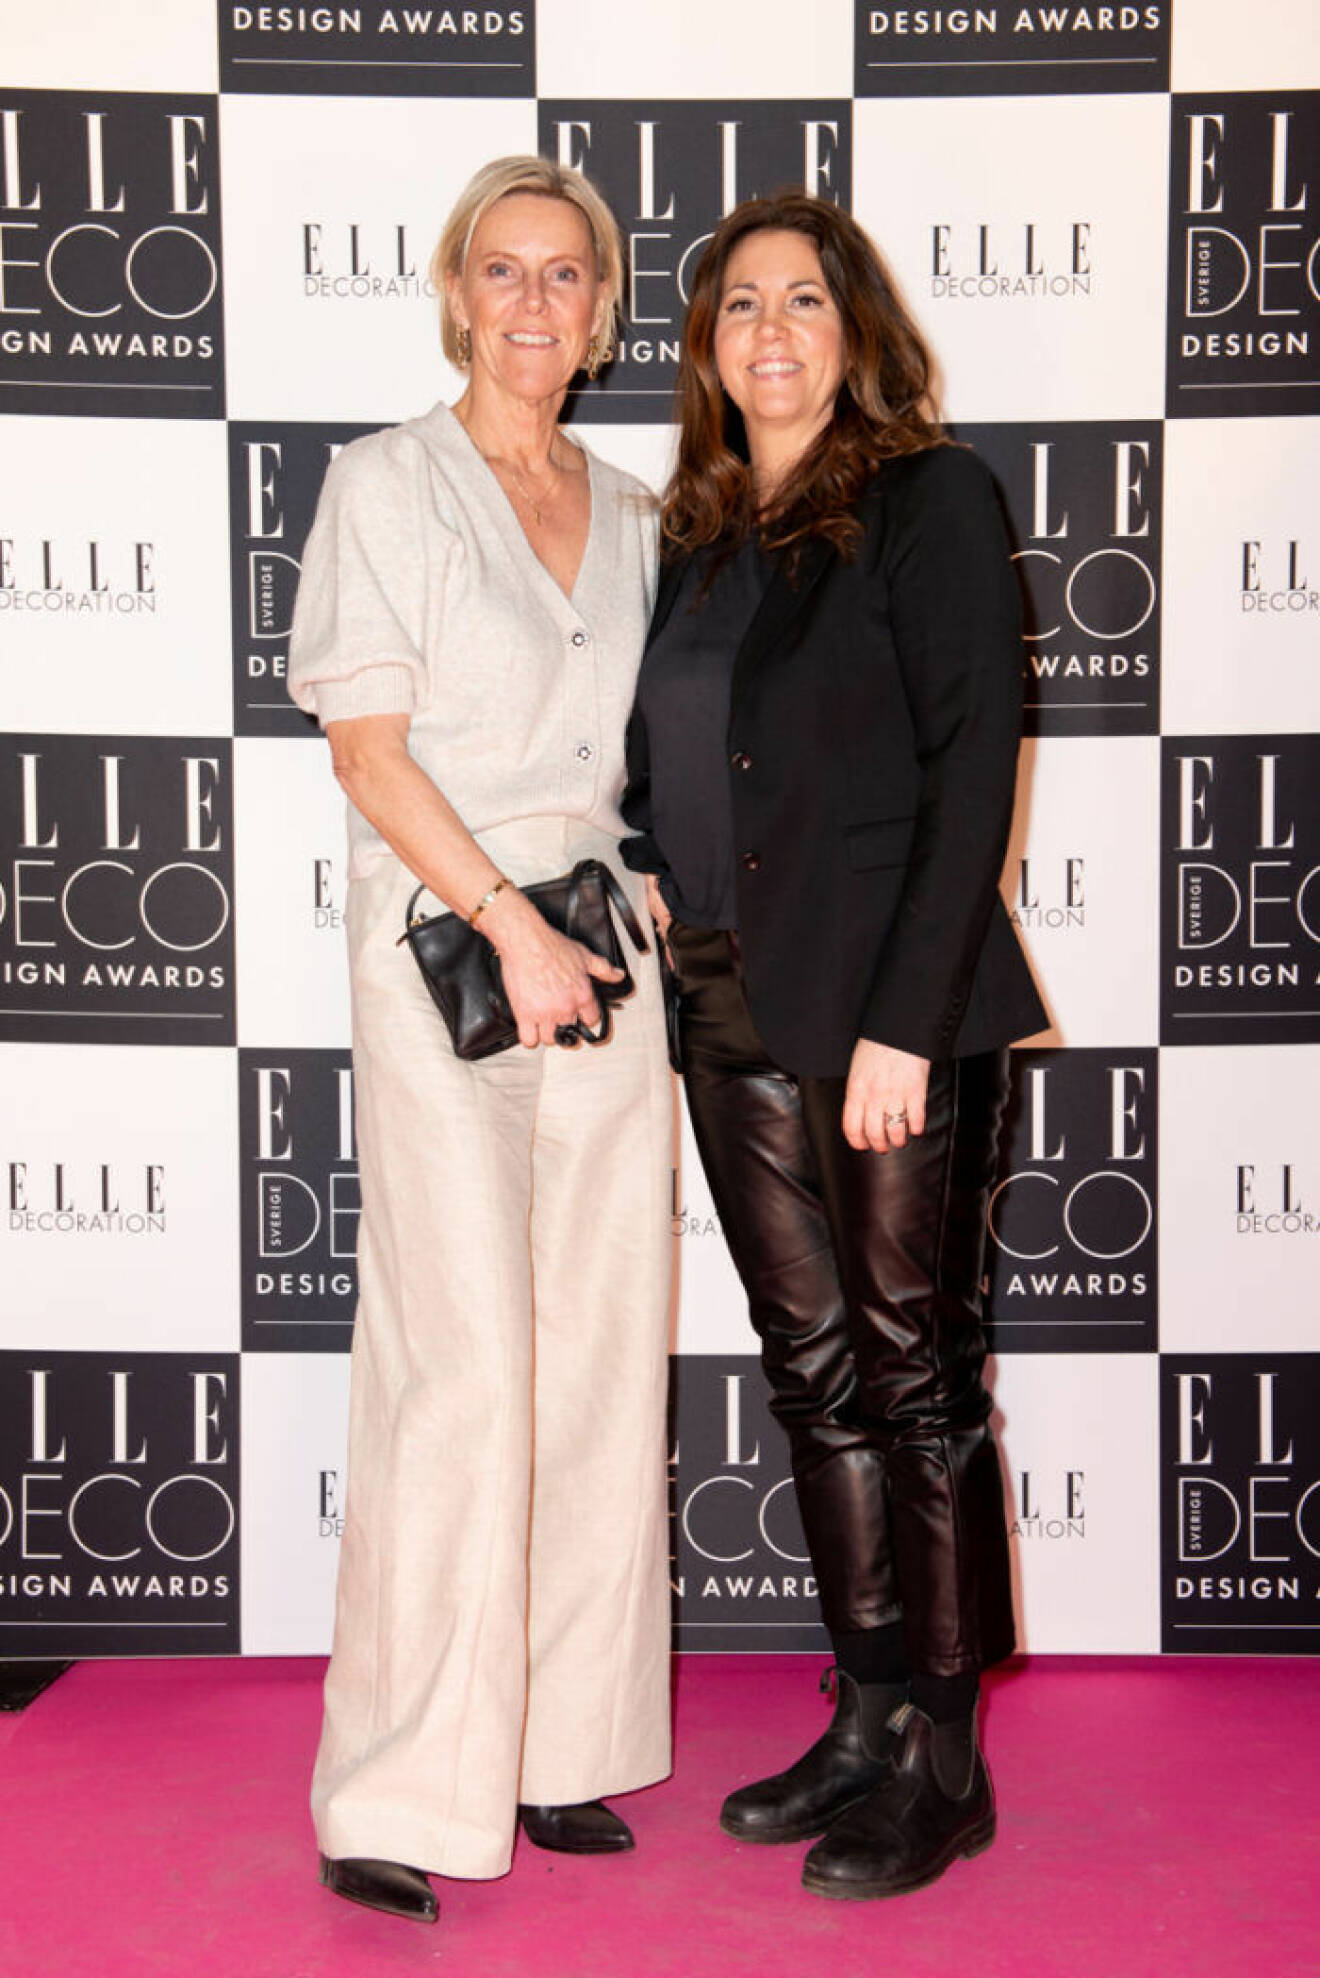 Ann-Catherine Östling och Karin Uggla på ELLE Deco Design Awards 2020